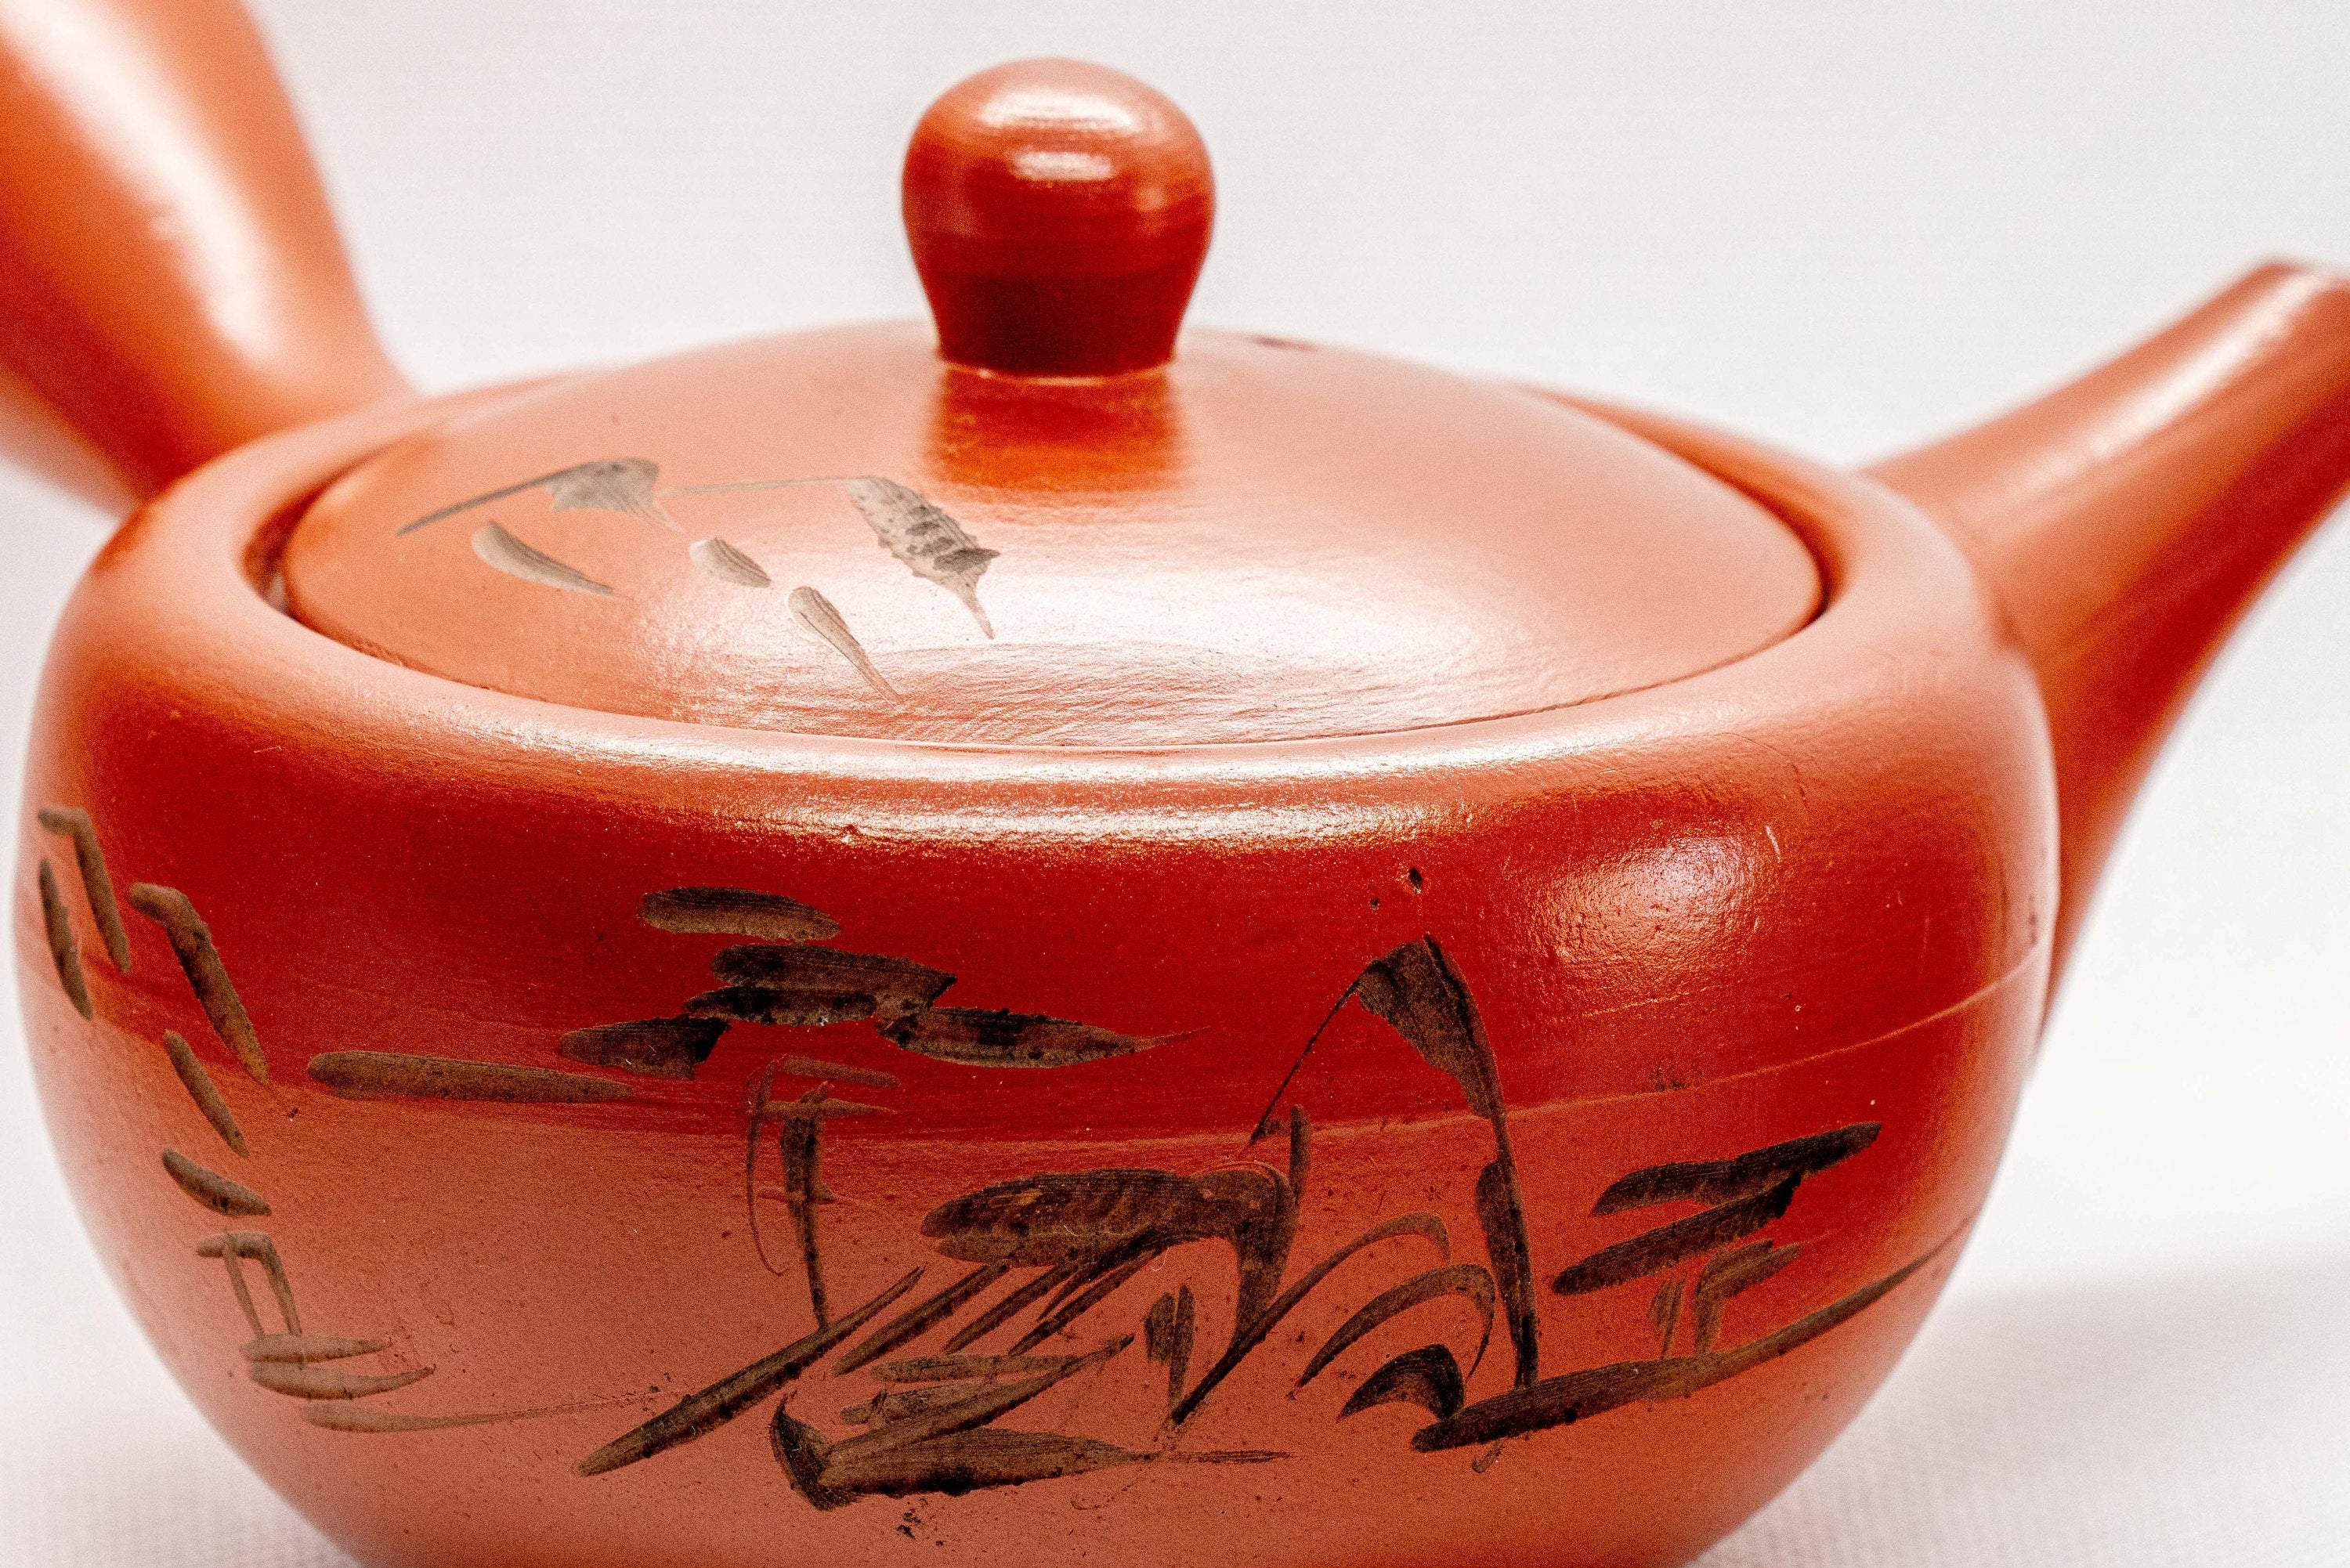 Japanese Kyusu - Tokoname-yaki Ceramic Teapot with Mesh Strainer - 225ml